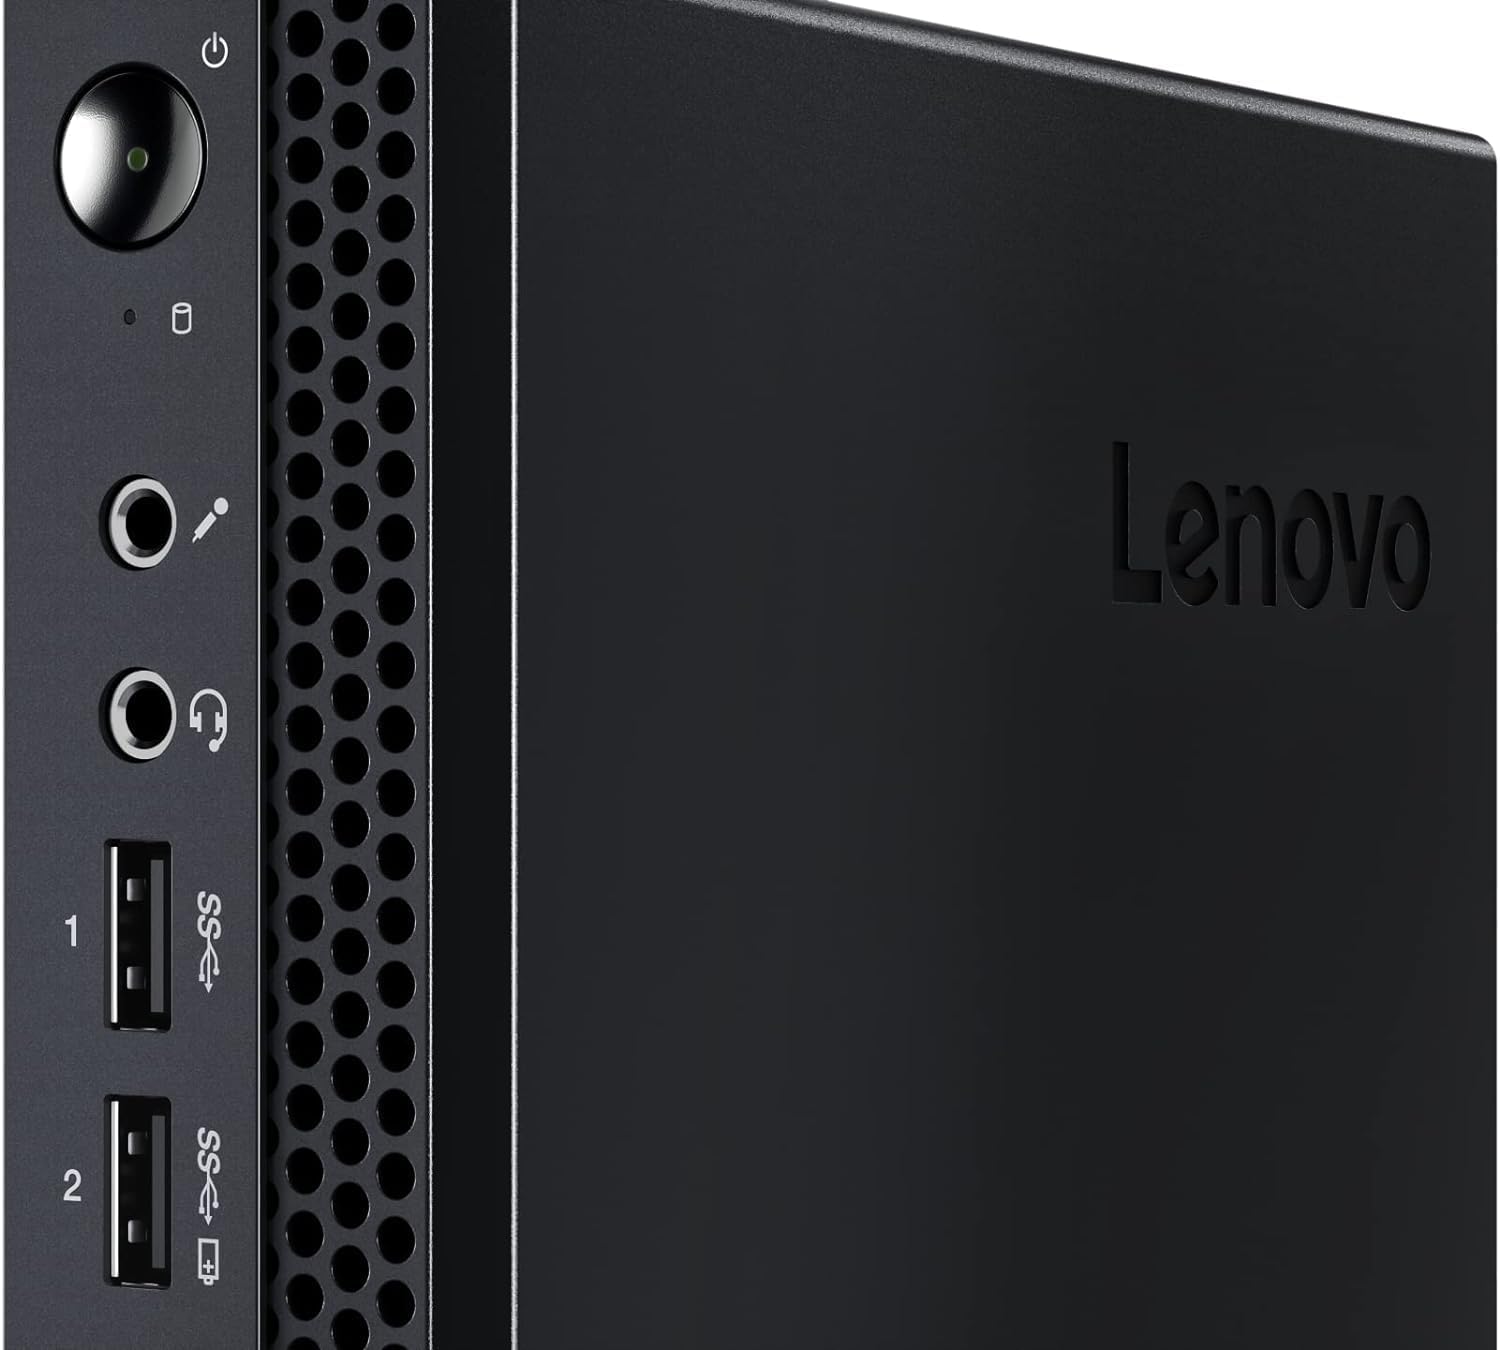 Lenovo ThinkCentre M625 Mini Desktop PC Black (AMD A4-9120c, 8GB RAM, 128GB PCIe SSD, AMD Radeon, AC WiFi, Bluetooth 5.1, 6 USB Ports, 2 Display Port (DP), RJ-45, Win 10 Home) with DKZ Hub